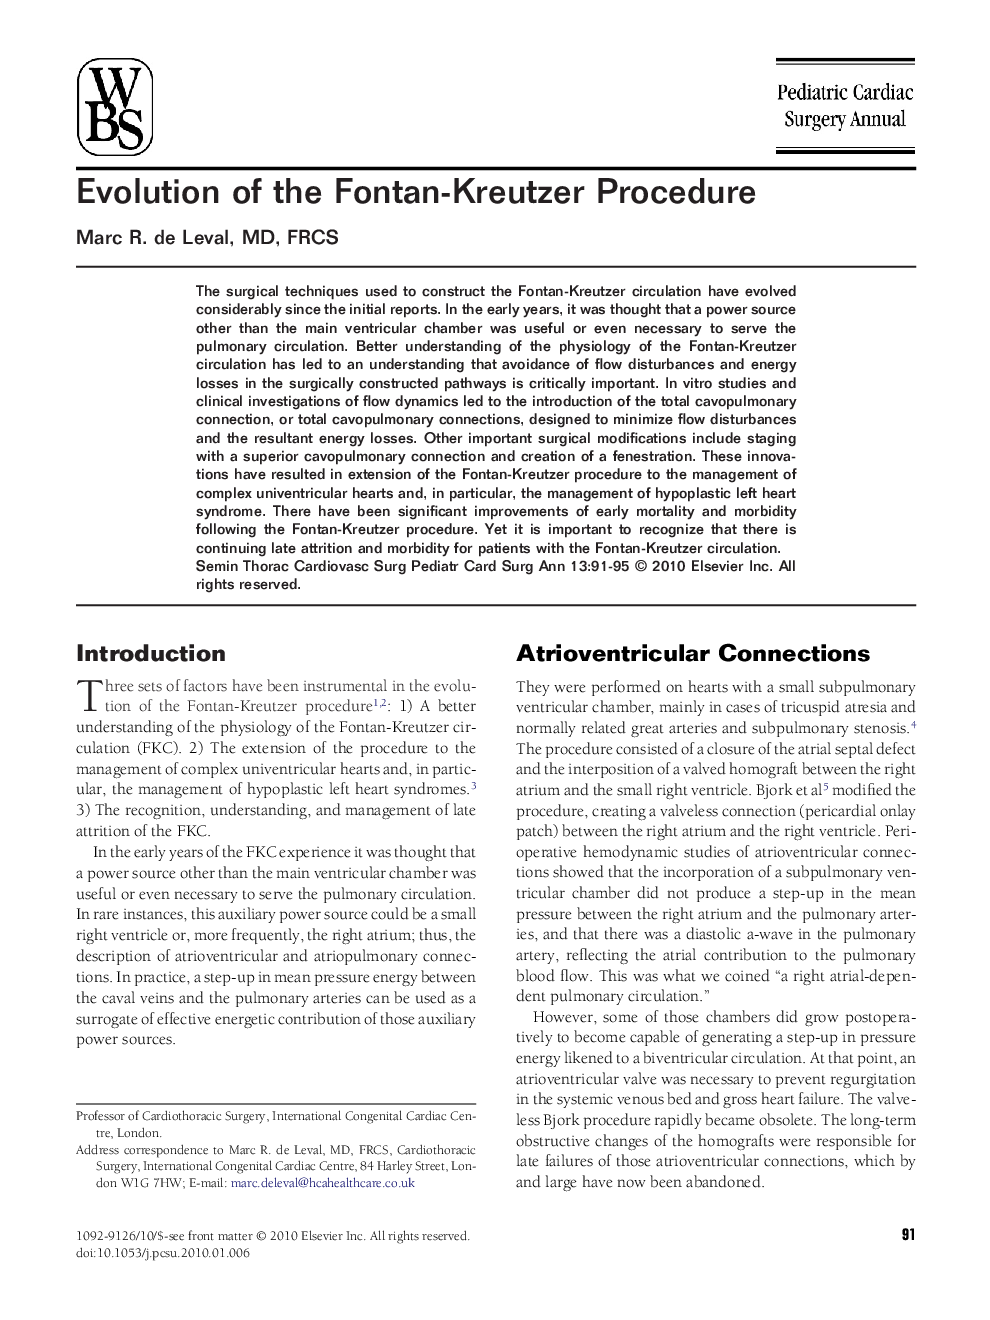 Evolution of the Fontan-Kreutzer Procedure